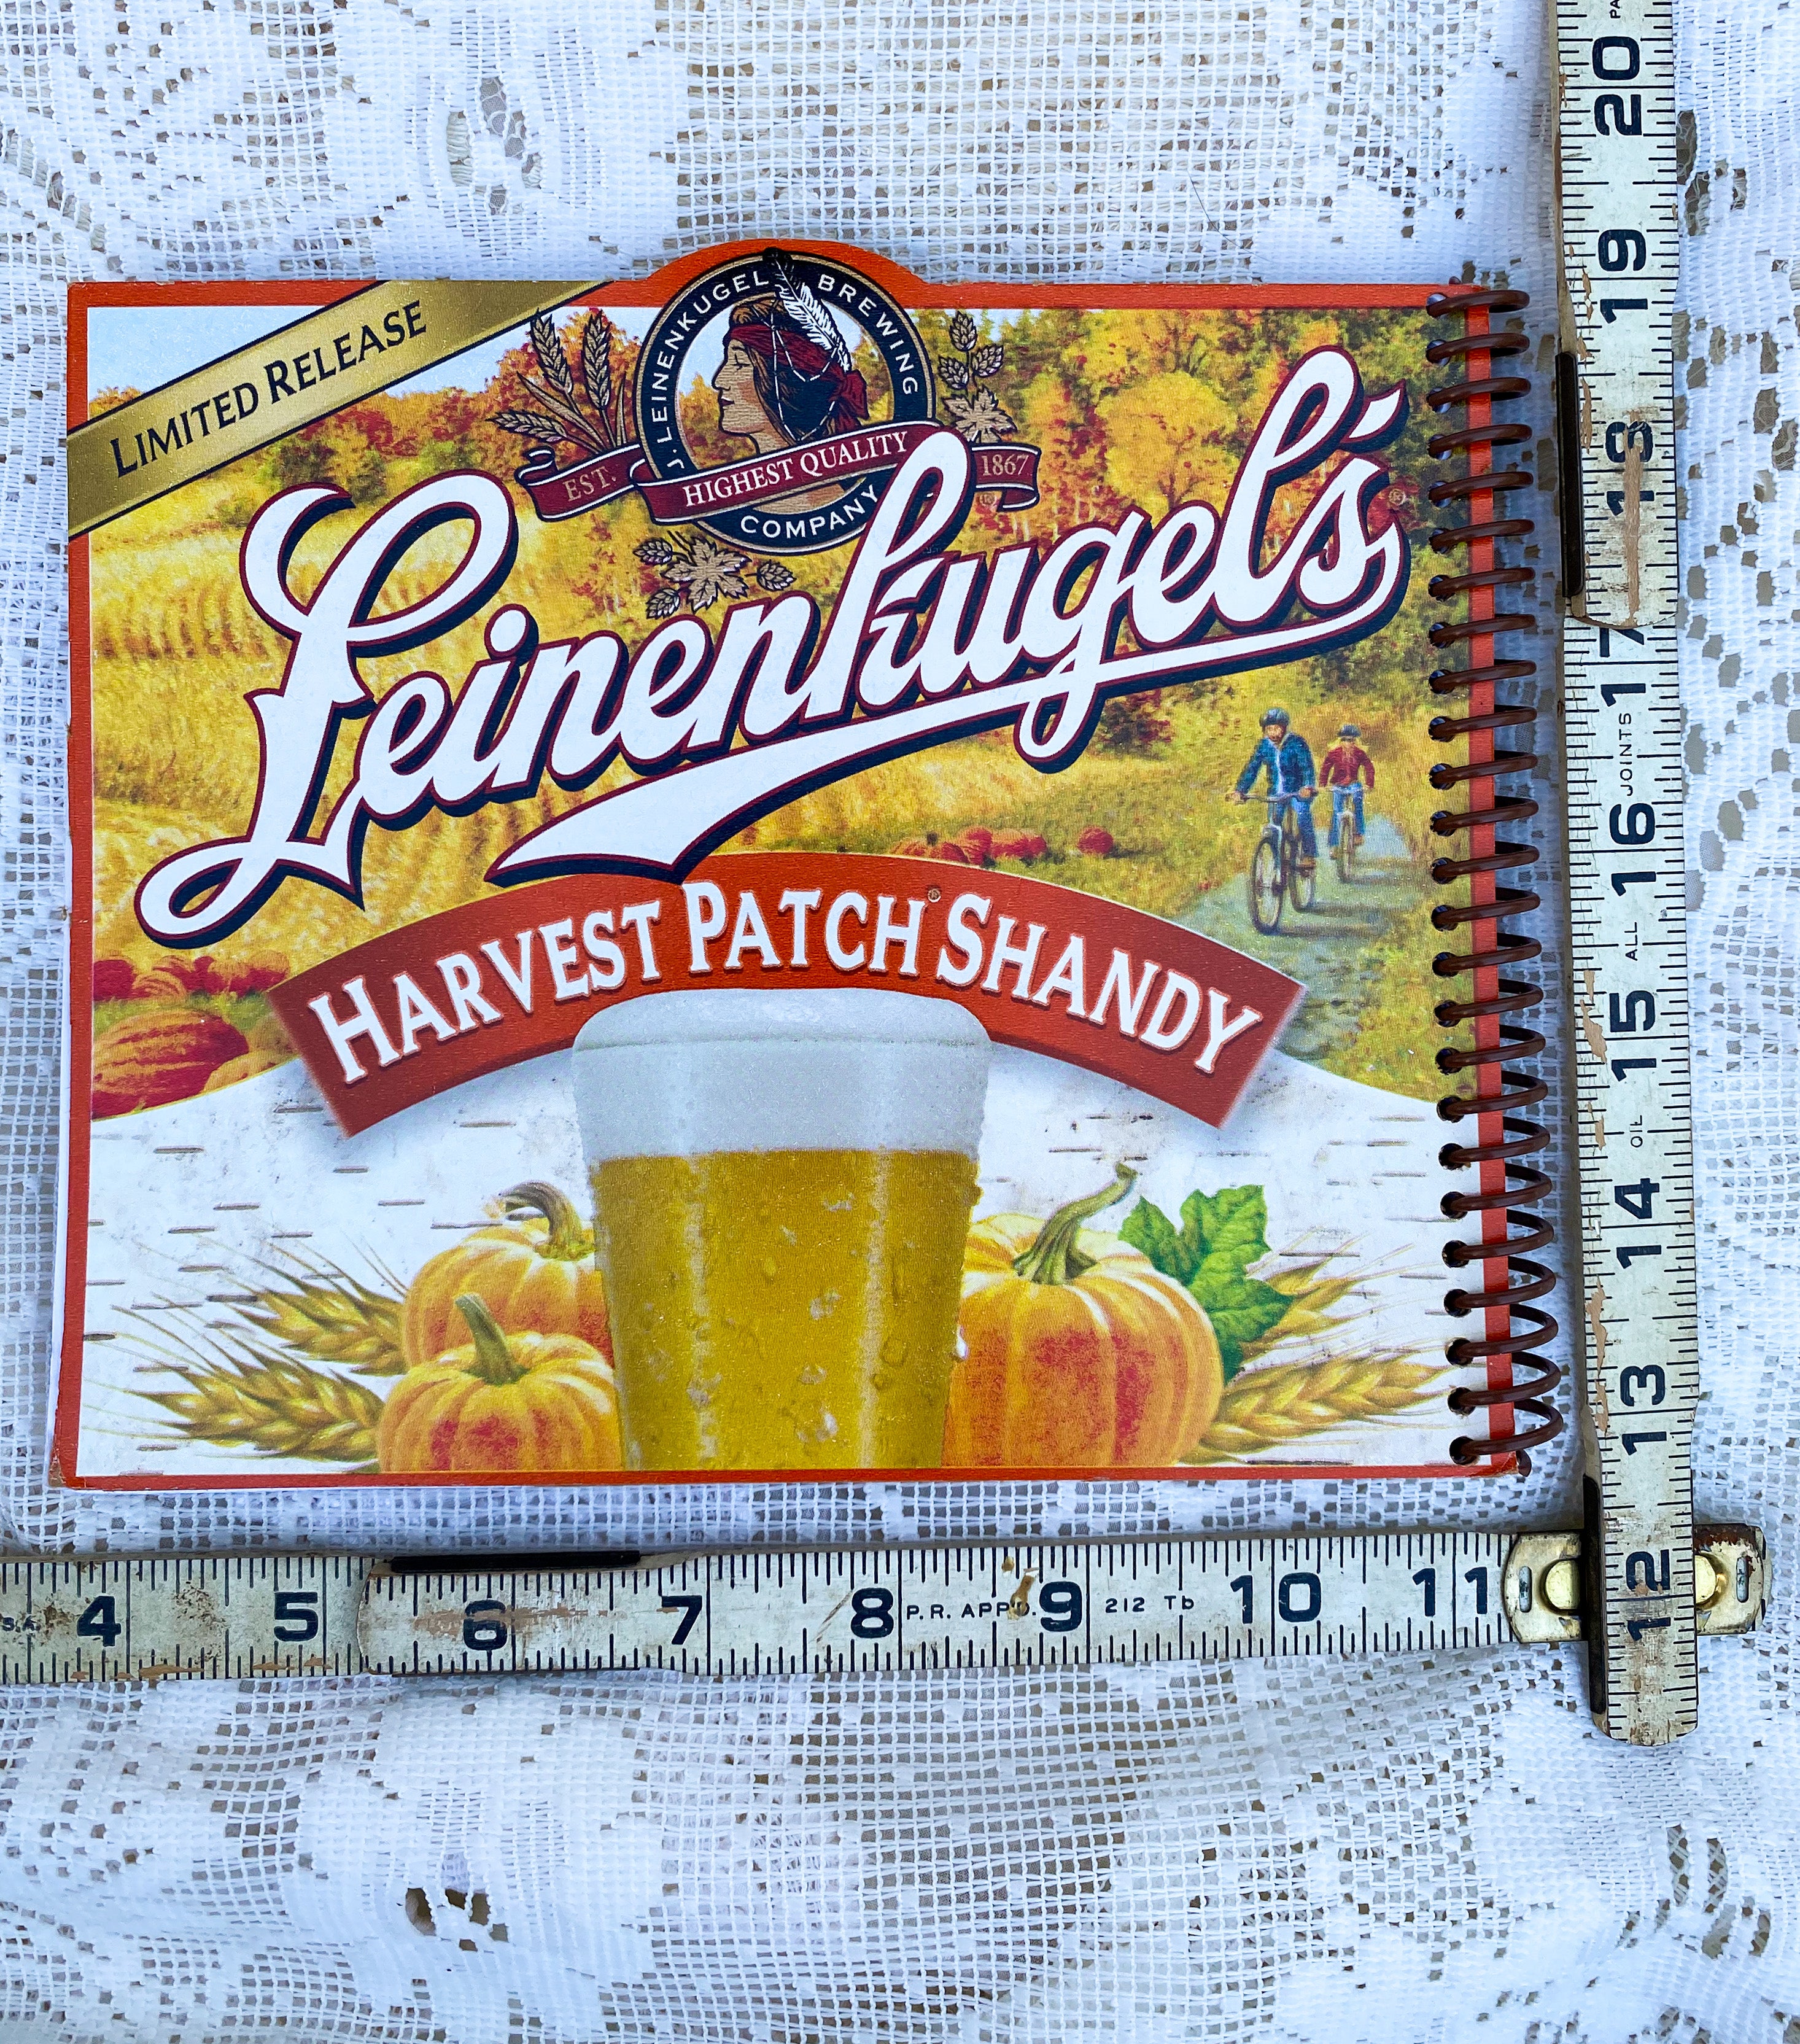 Leinenkugel’s Harvest Patch Shandy Recycled Beer Carton Notebook